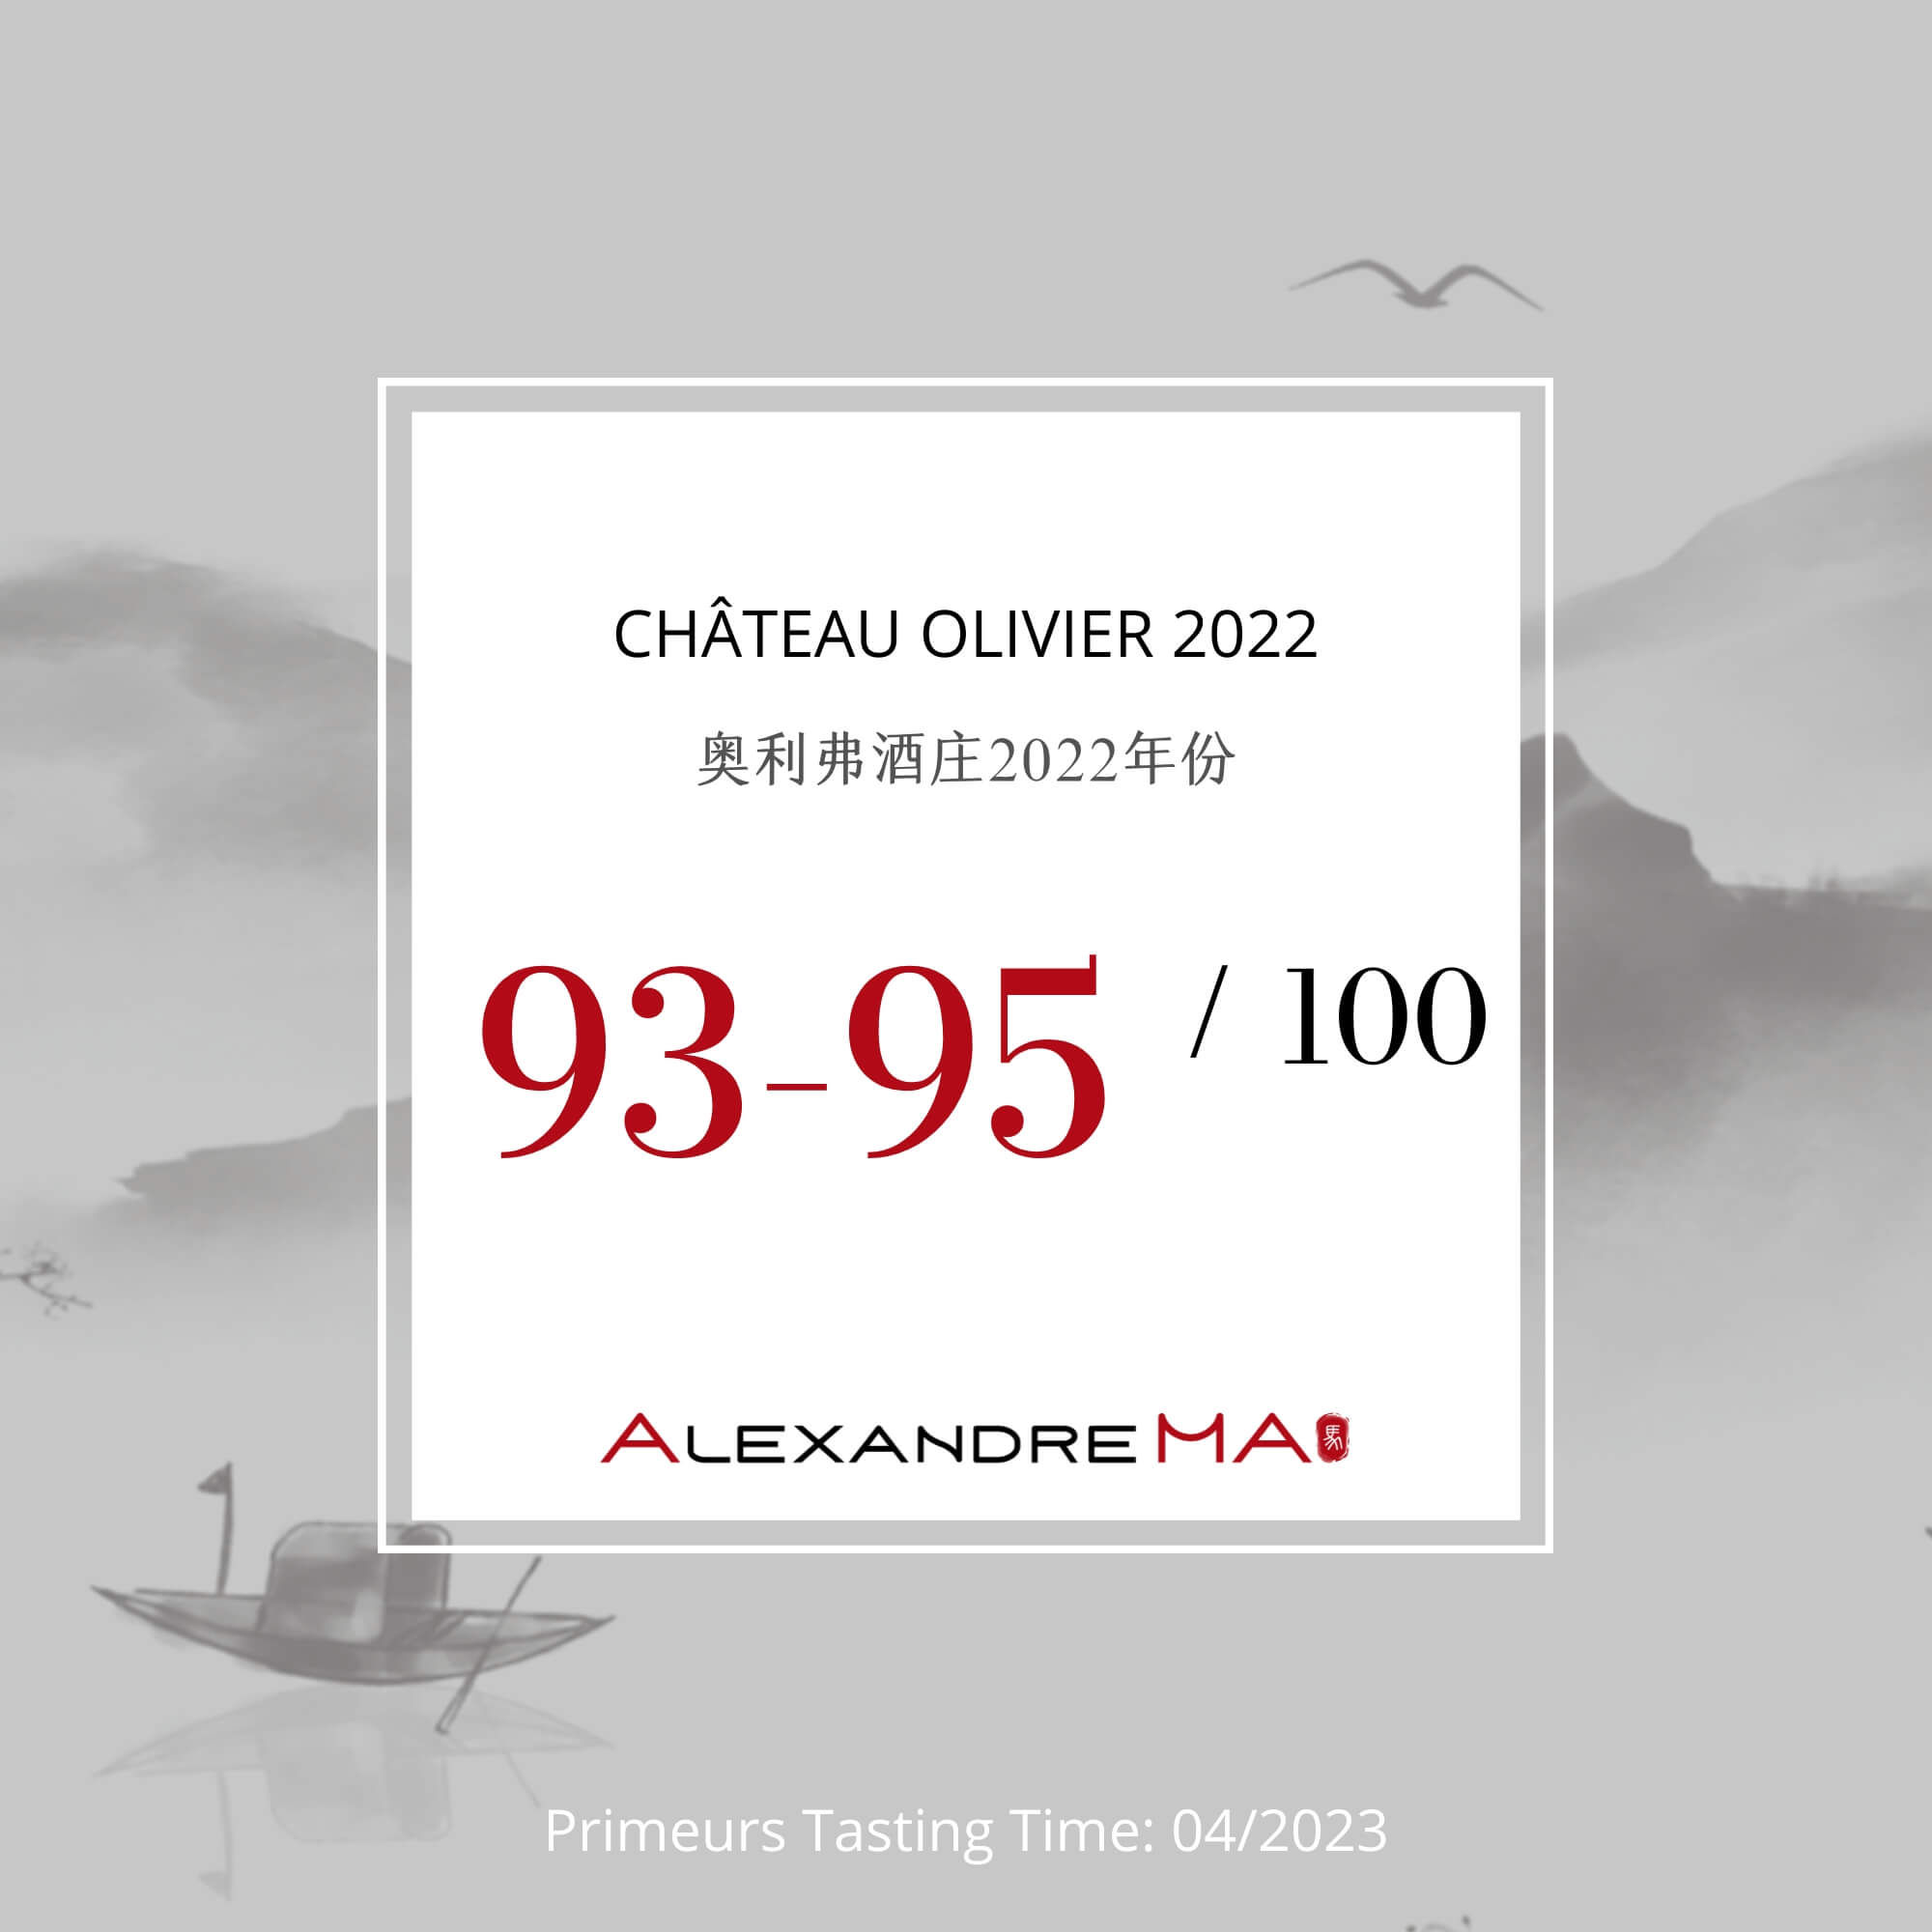 Château Olivier 2022 Primeurs - Alexandre MA